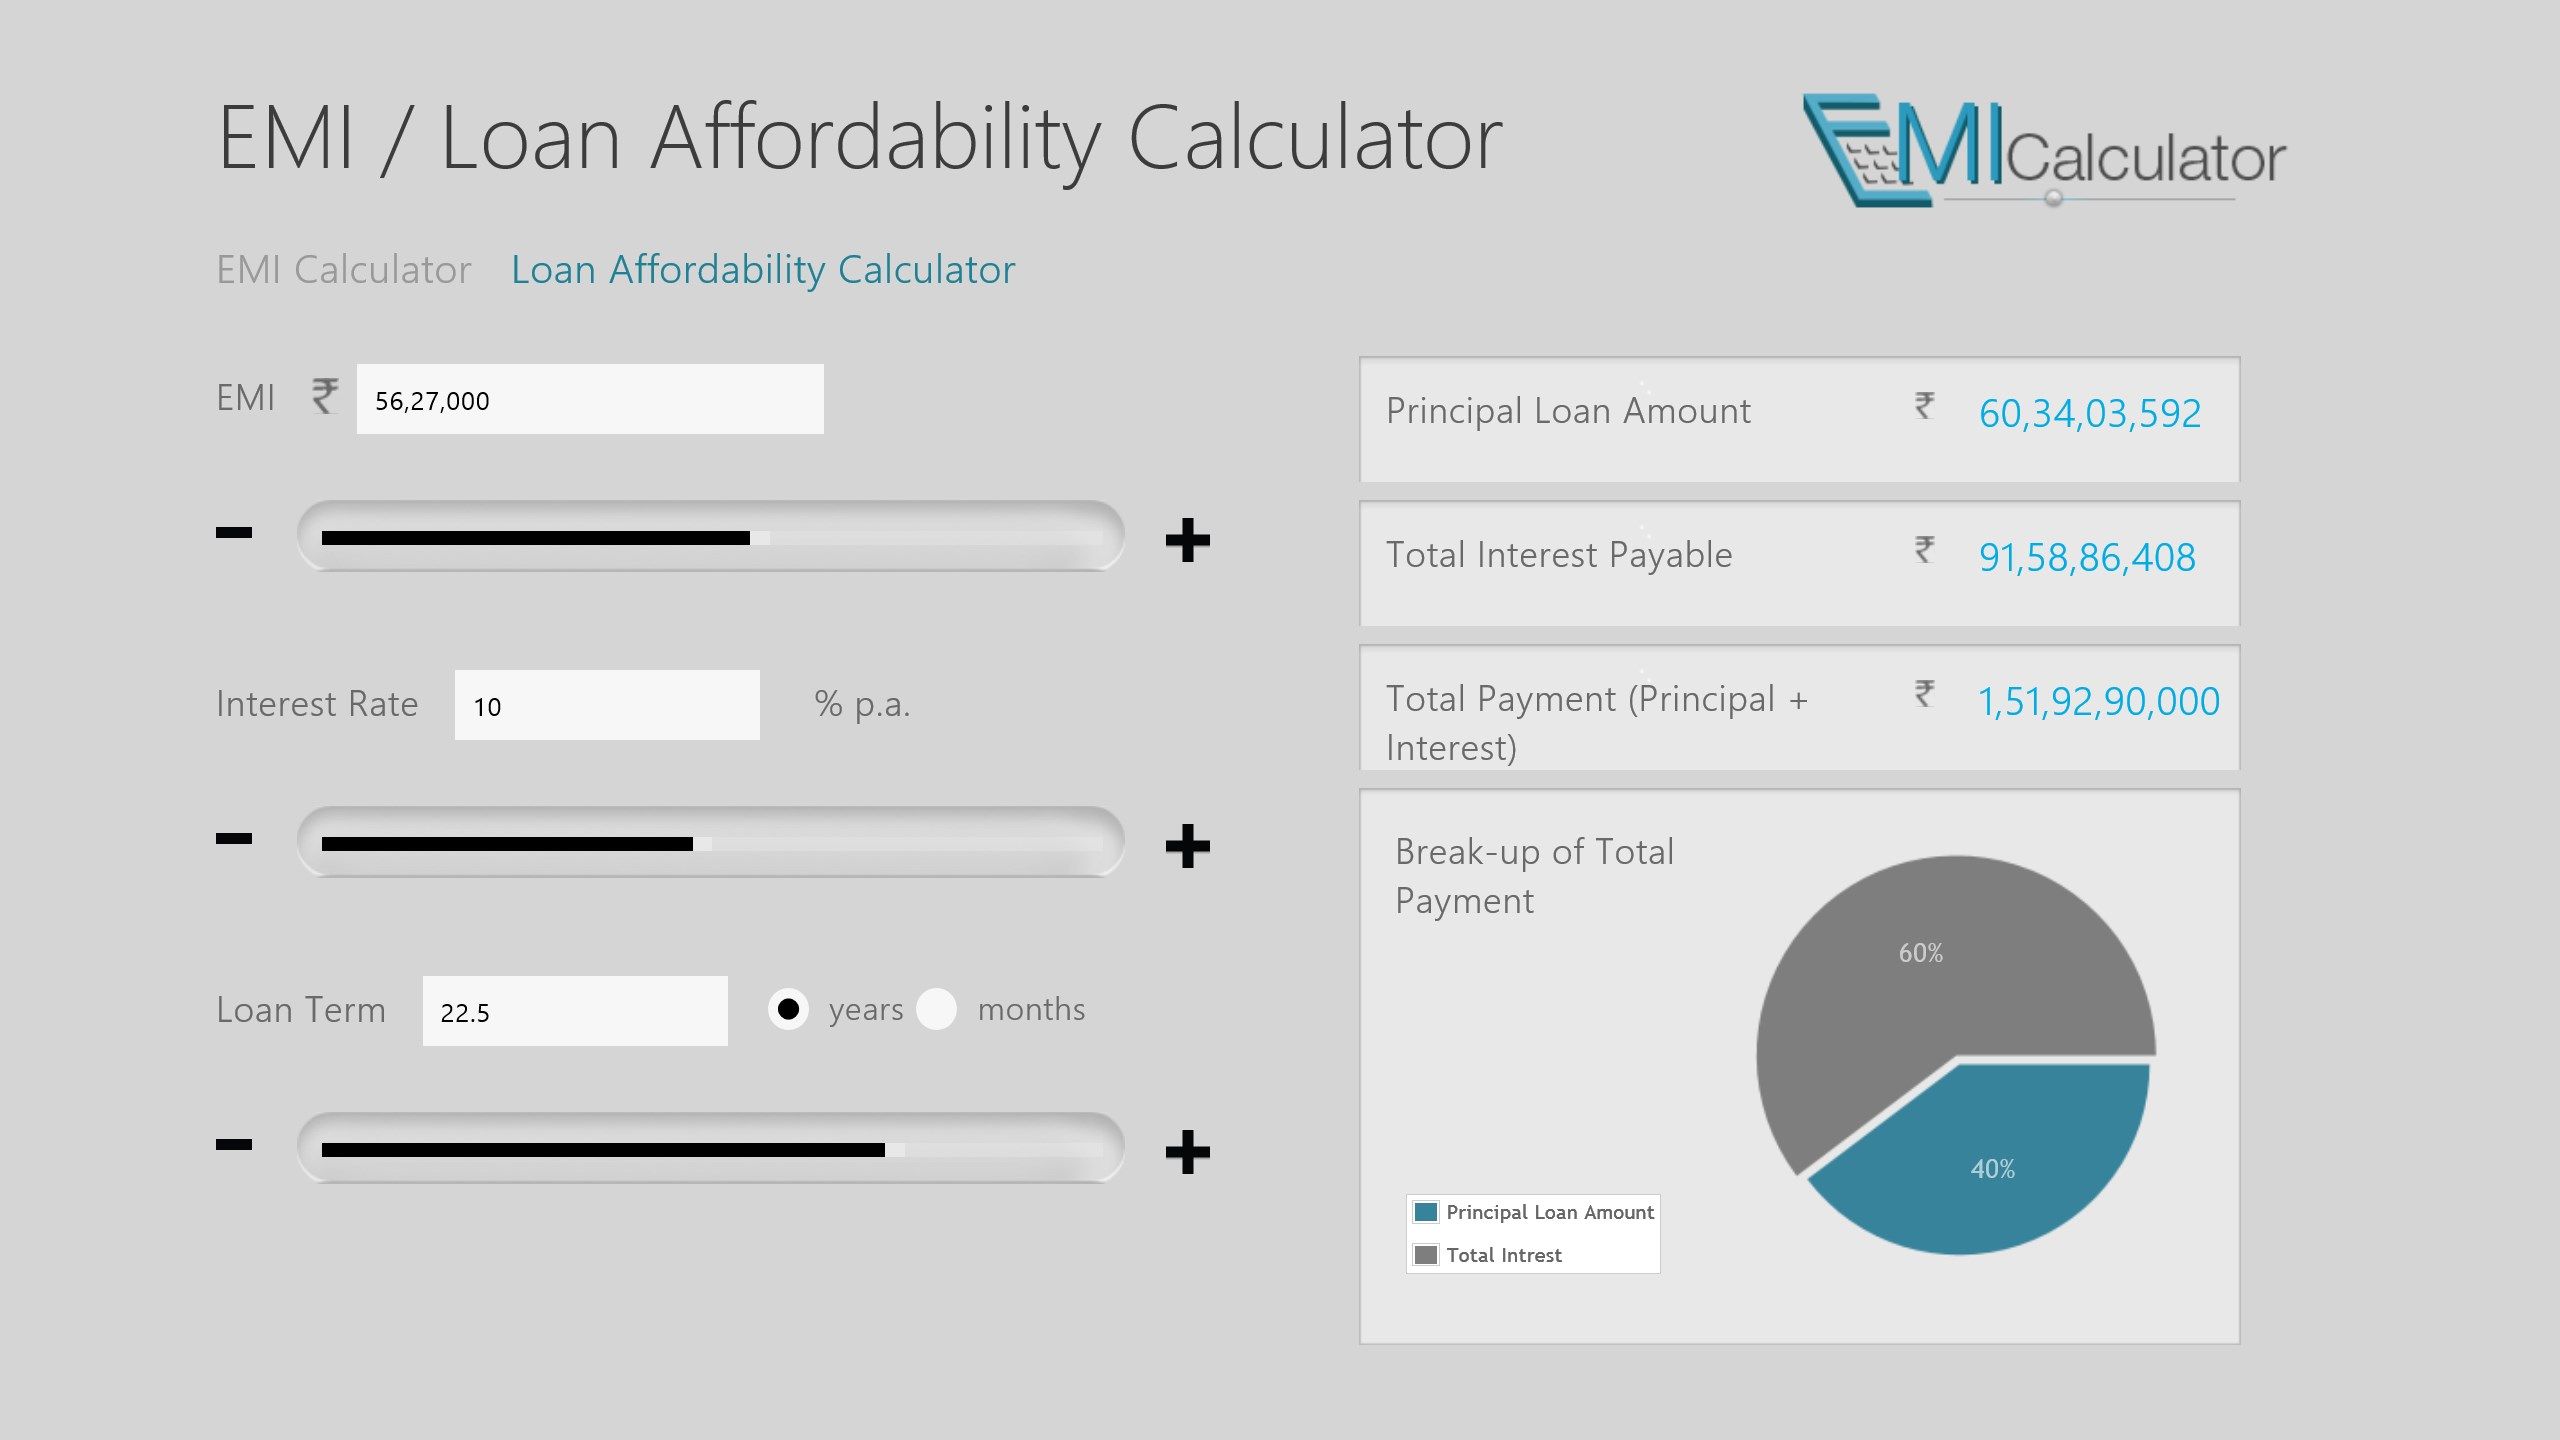 Calculate the Loan affordability